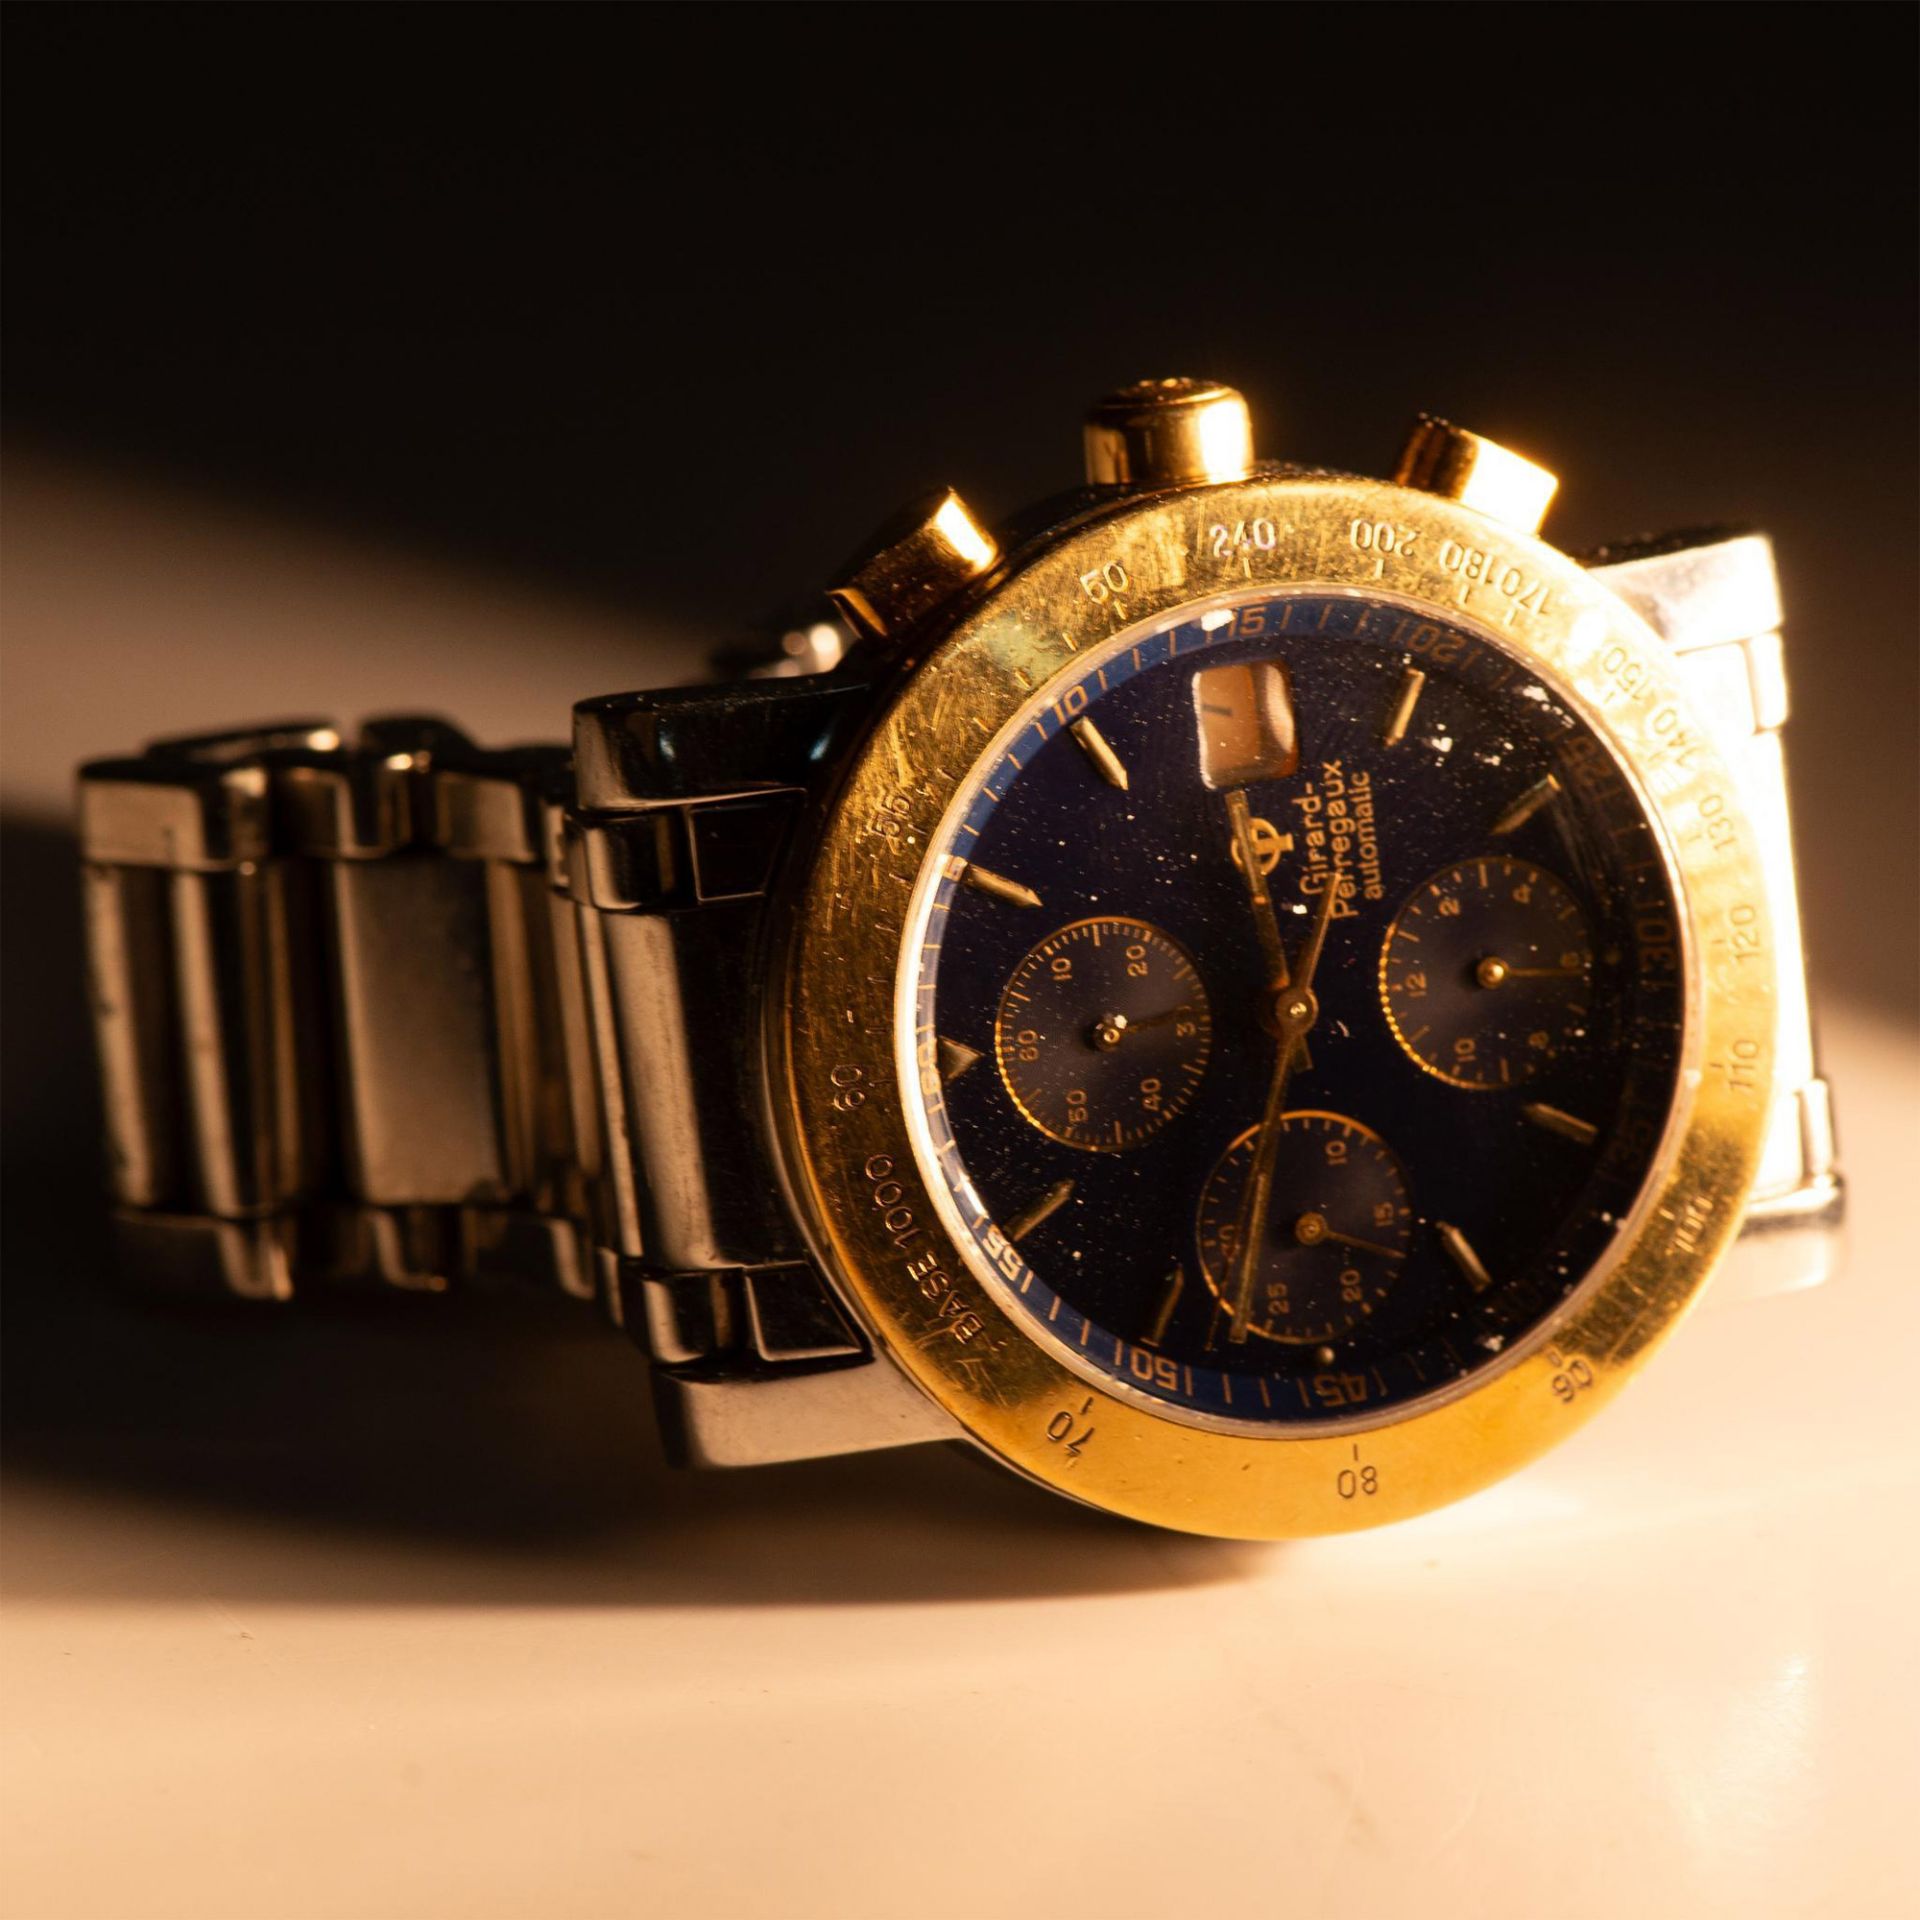 Girard Perregaux 7000 Chrono Automatic Men's Watch - Image 10 of 11